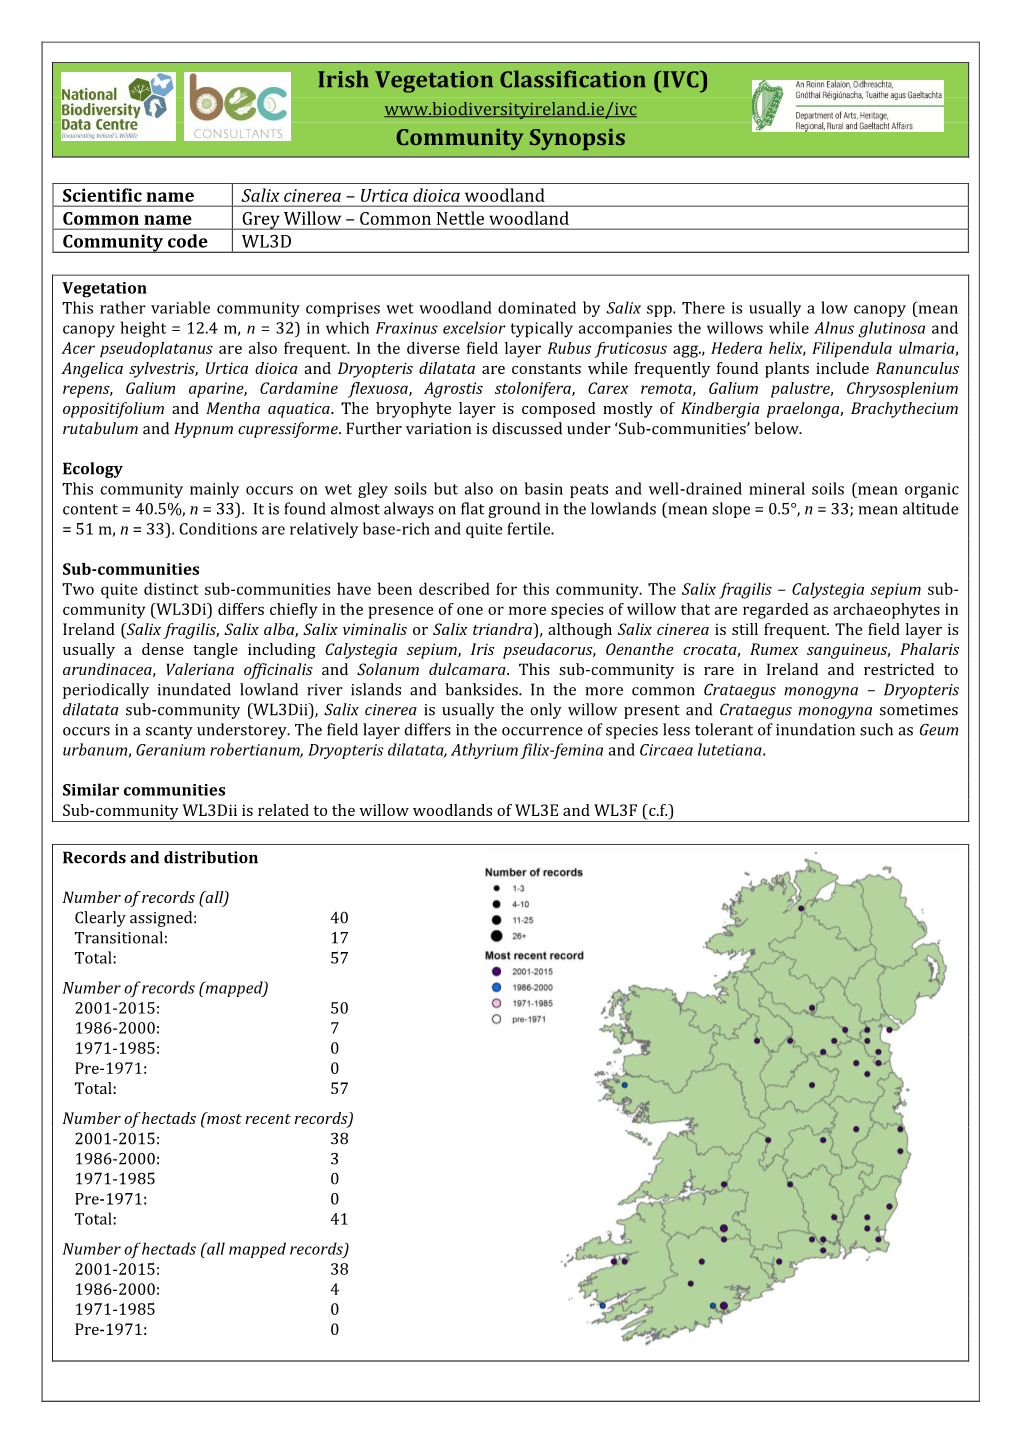 Irish Vegetation Classification (IVC) Community Synopsis